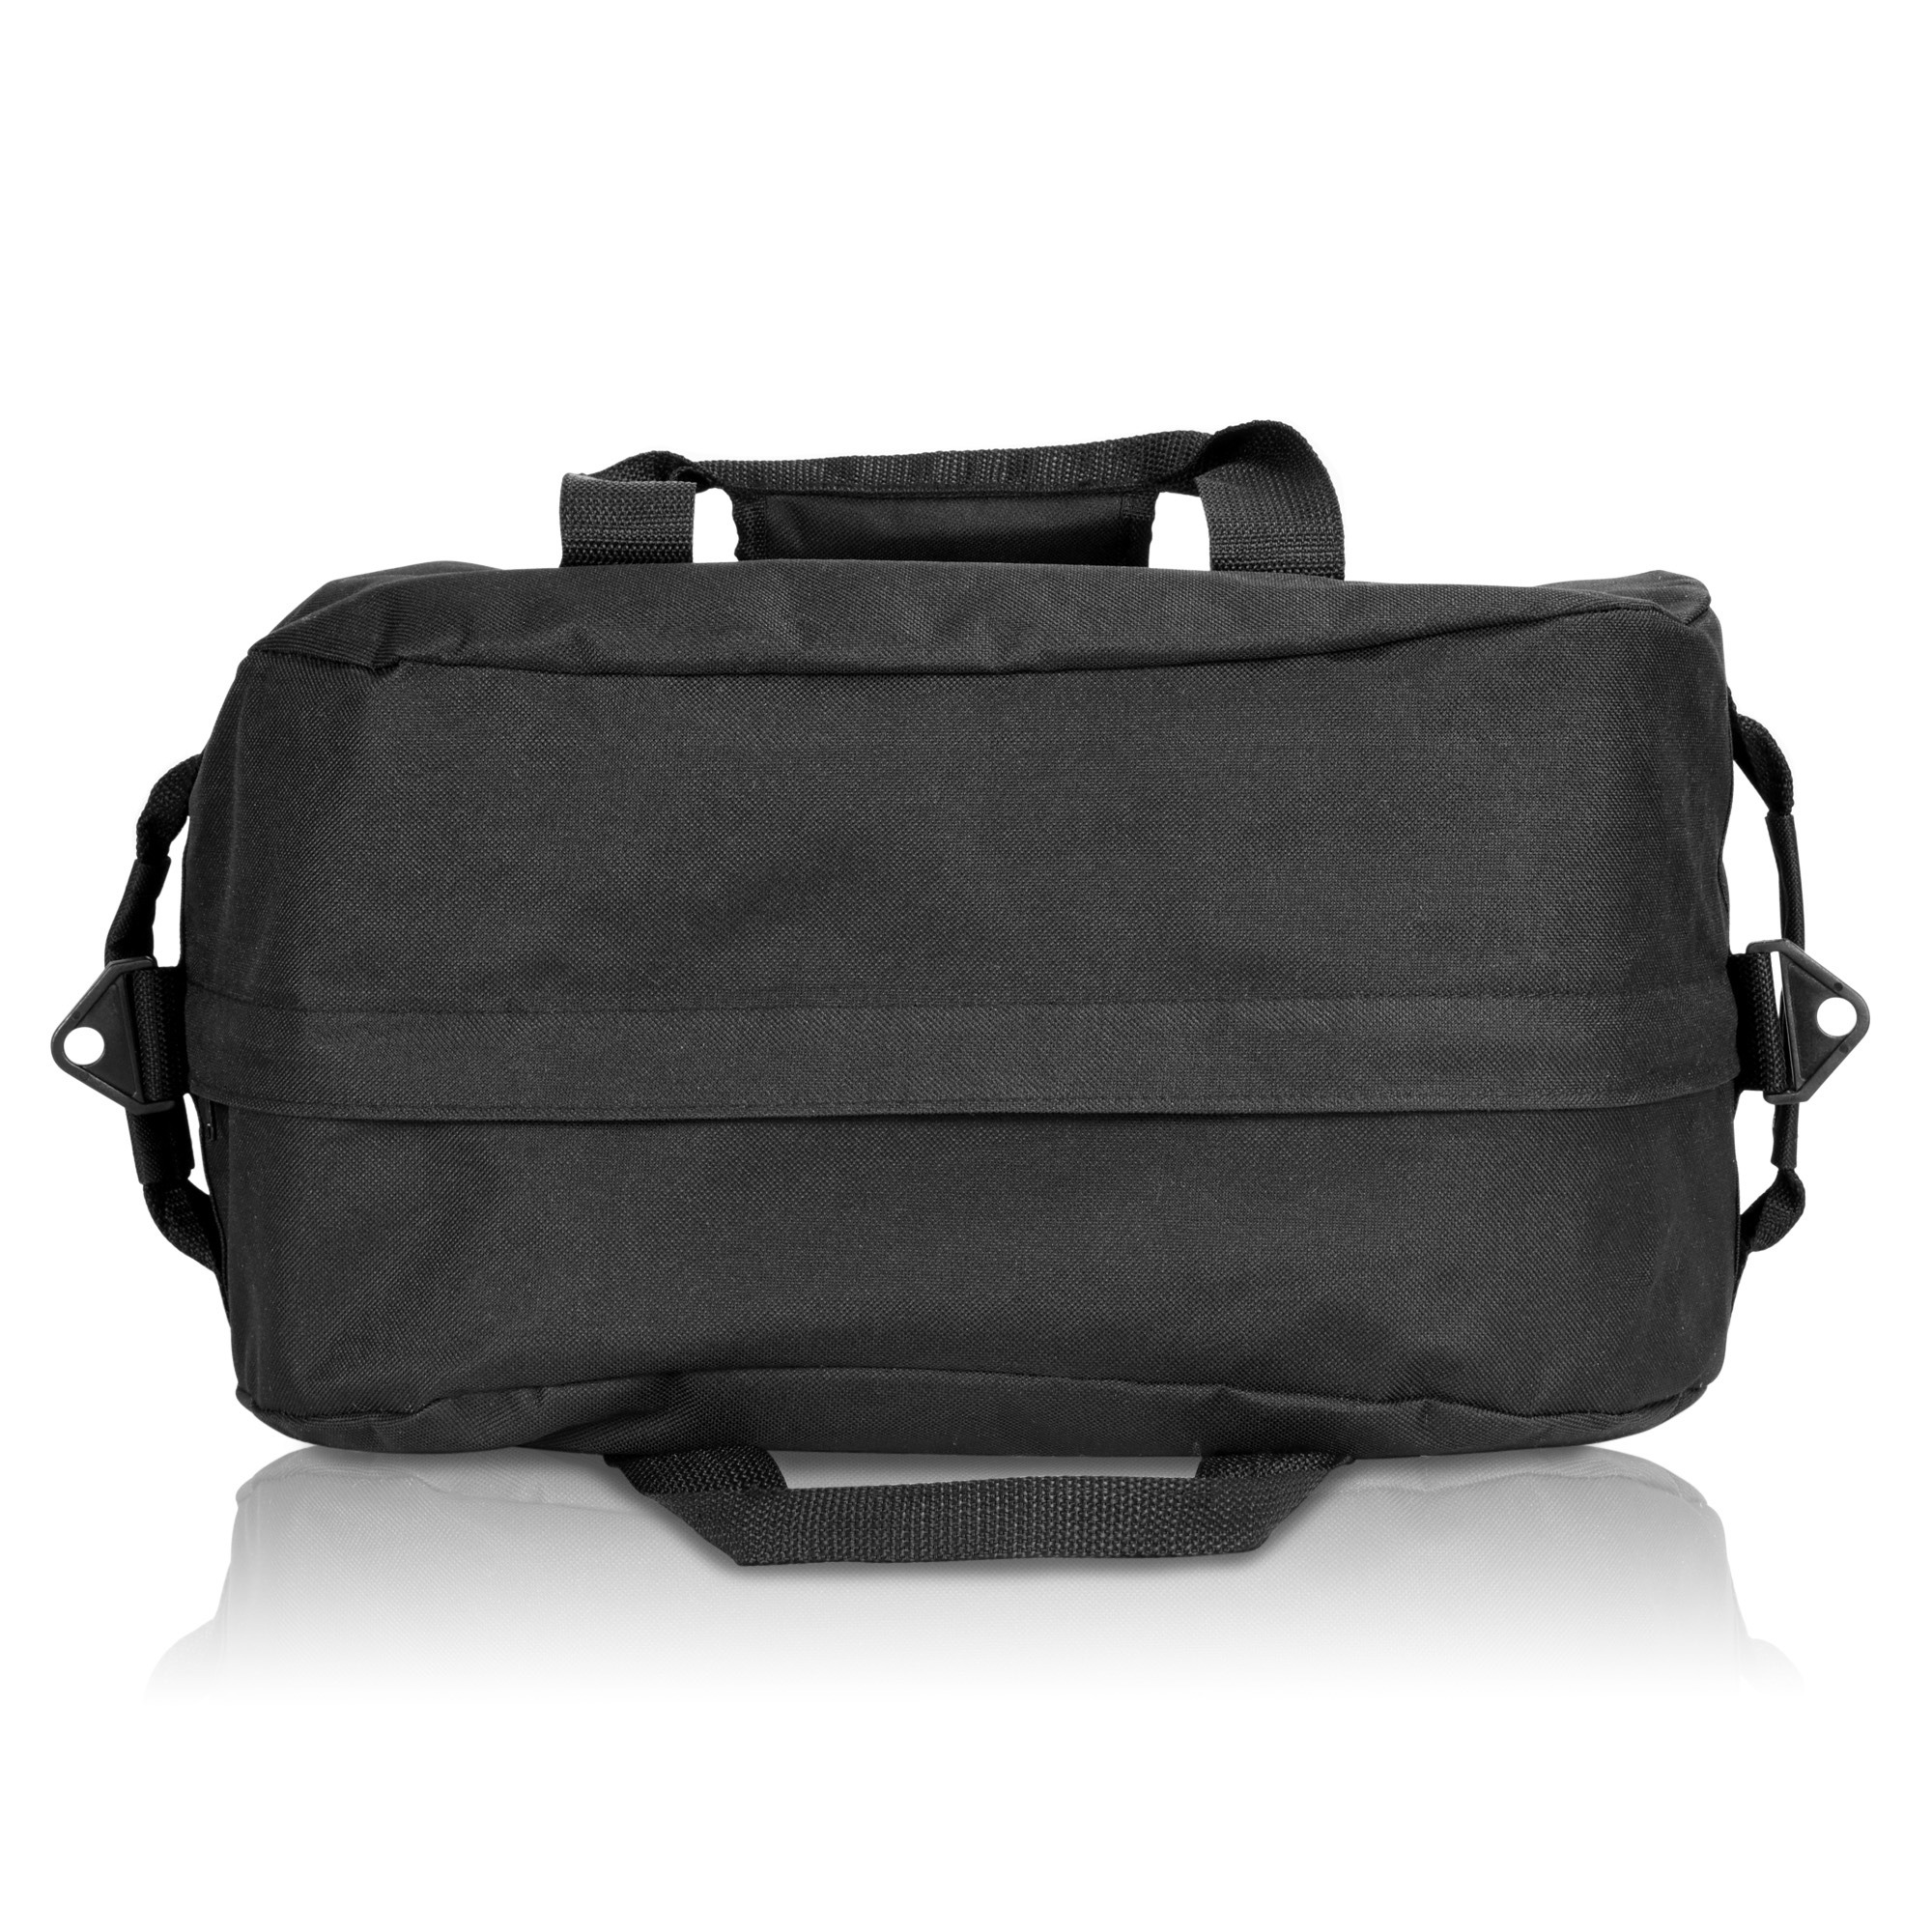 DALIX 18" Duffle Bag Two-Tone Sports Travel Gym Luggage Bag in Black - image 5 of 5